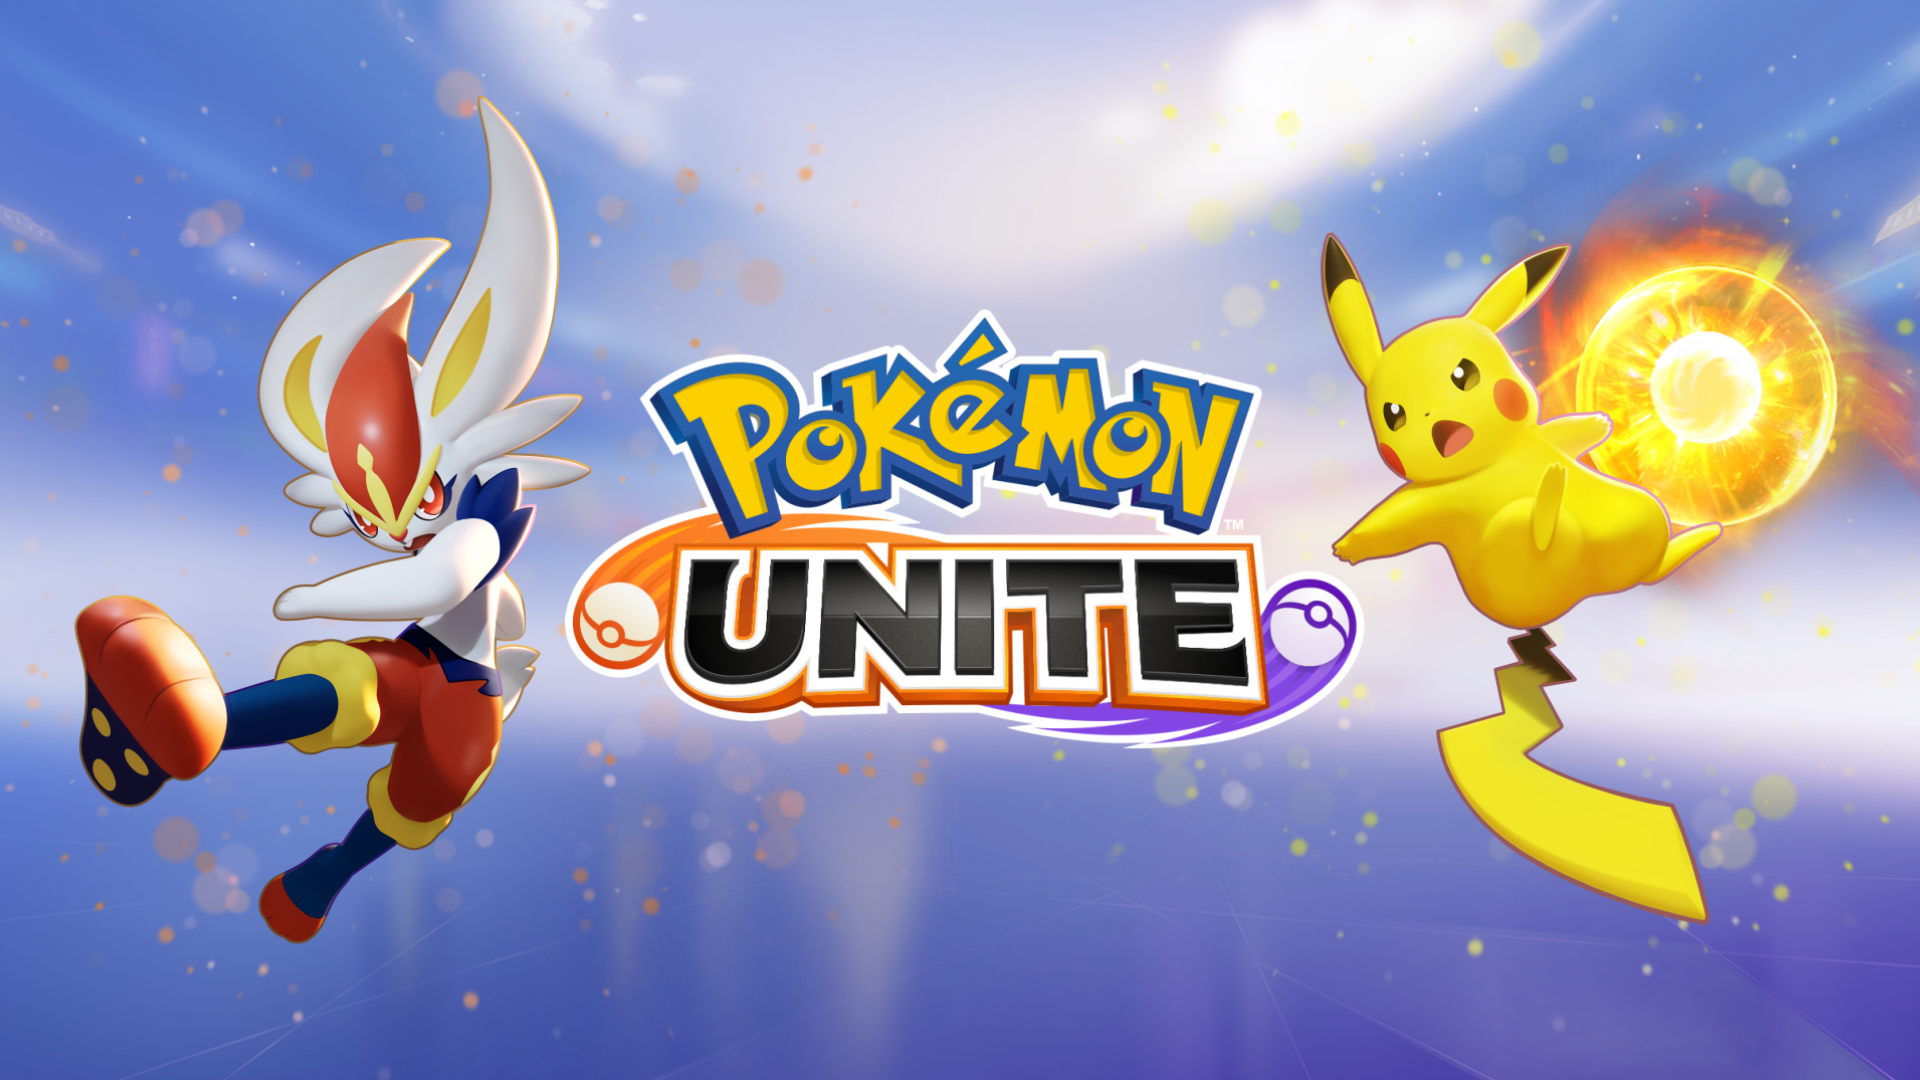 Review: Pokémon Unite